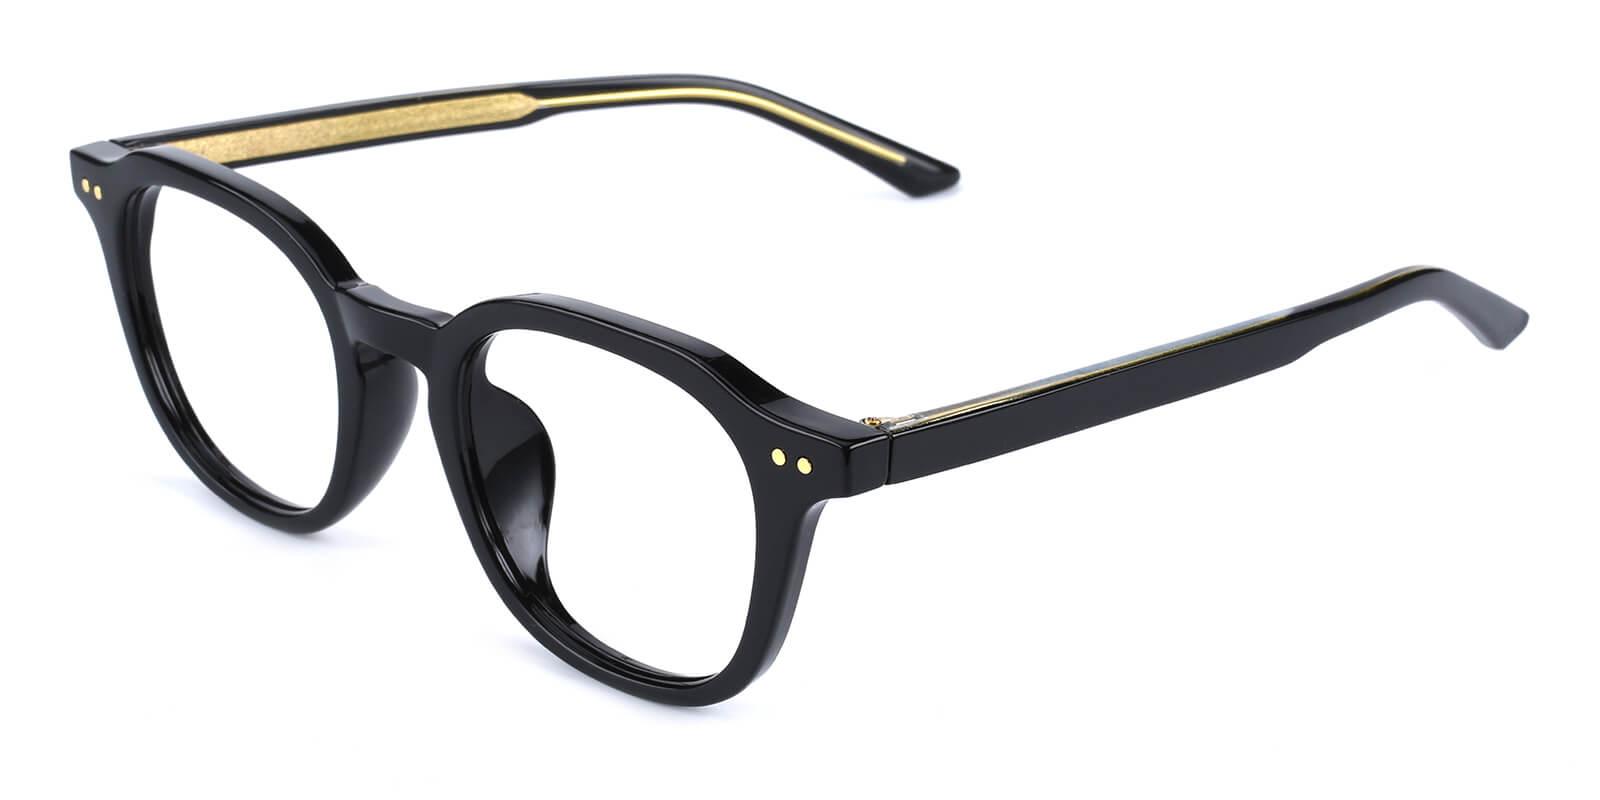 Dapper-Black-Geometric / Square-Acetate-Eyeglasses-detail